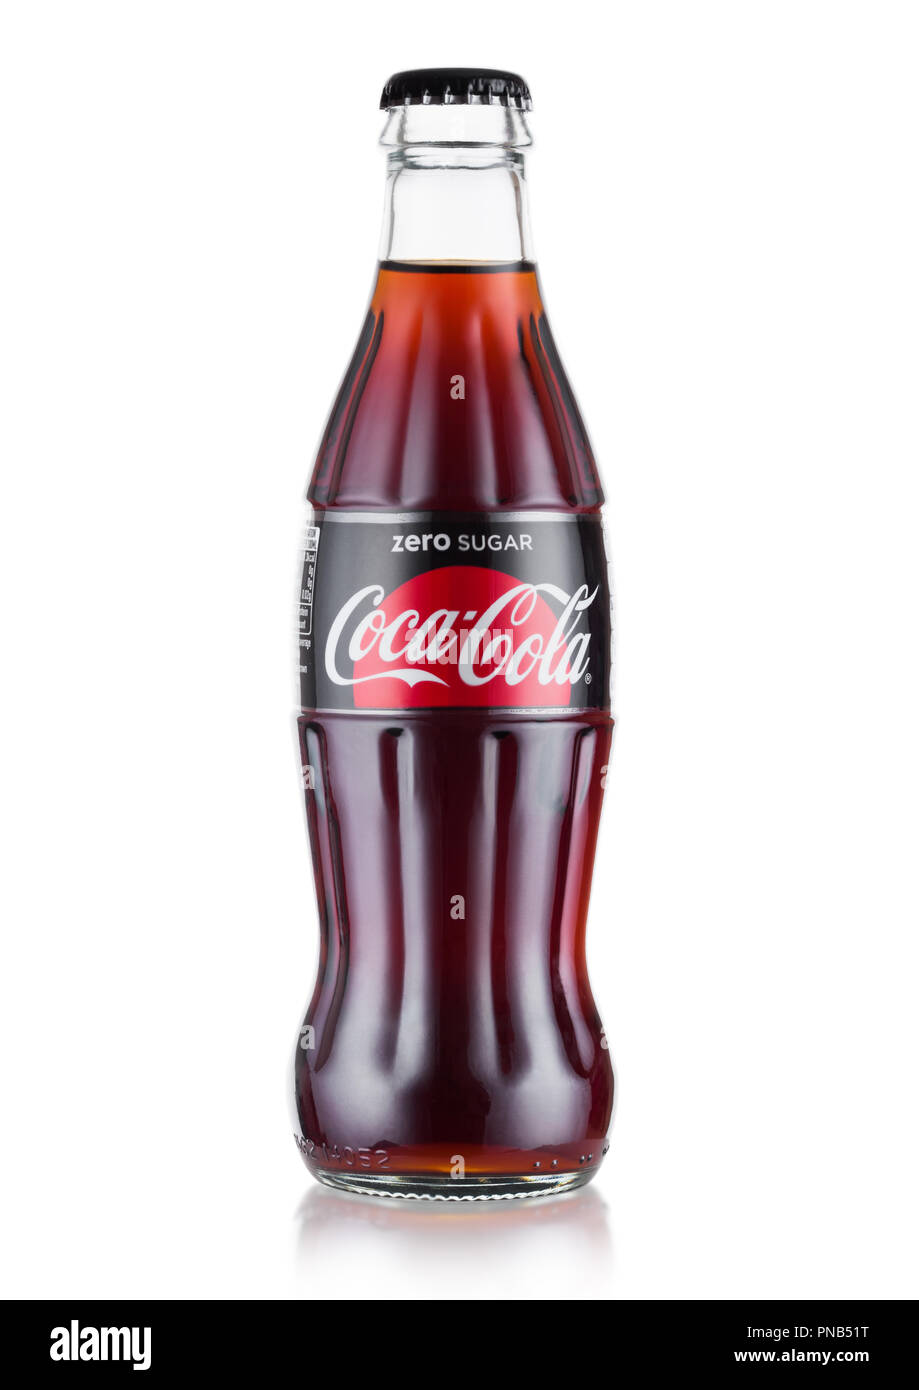 LONDON, UK - AUGUST 10, 2018: Bottle of Zero SugarCoca Cola soft drink on white. Stock Photo